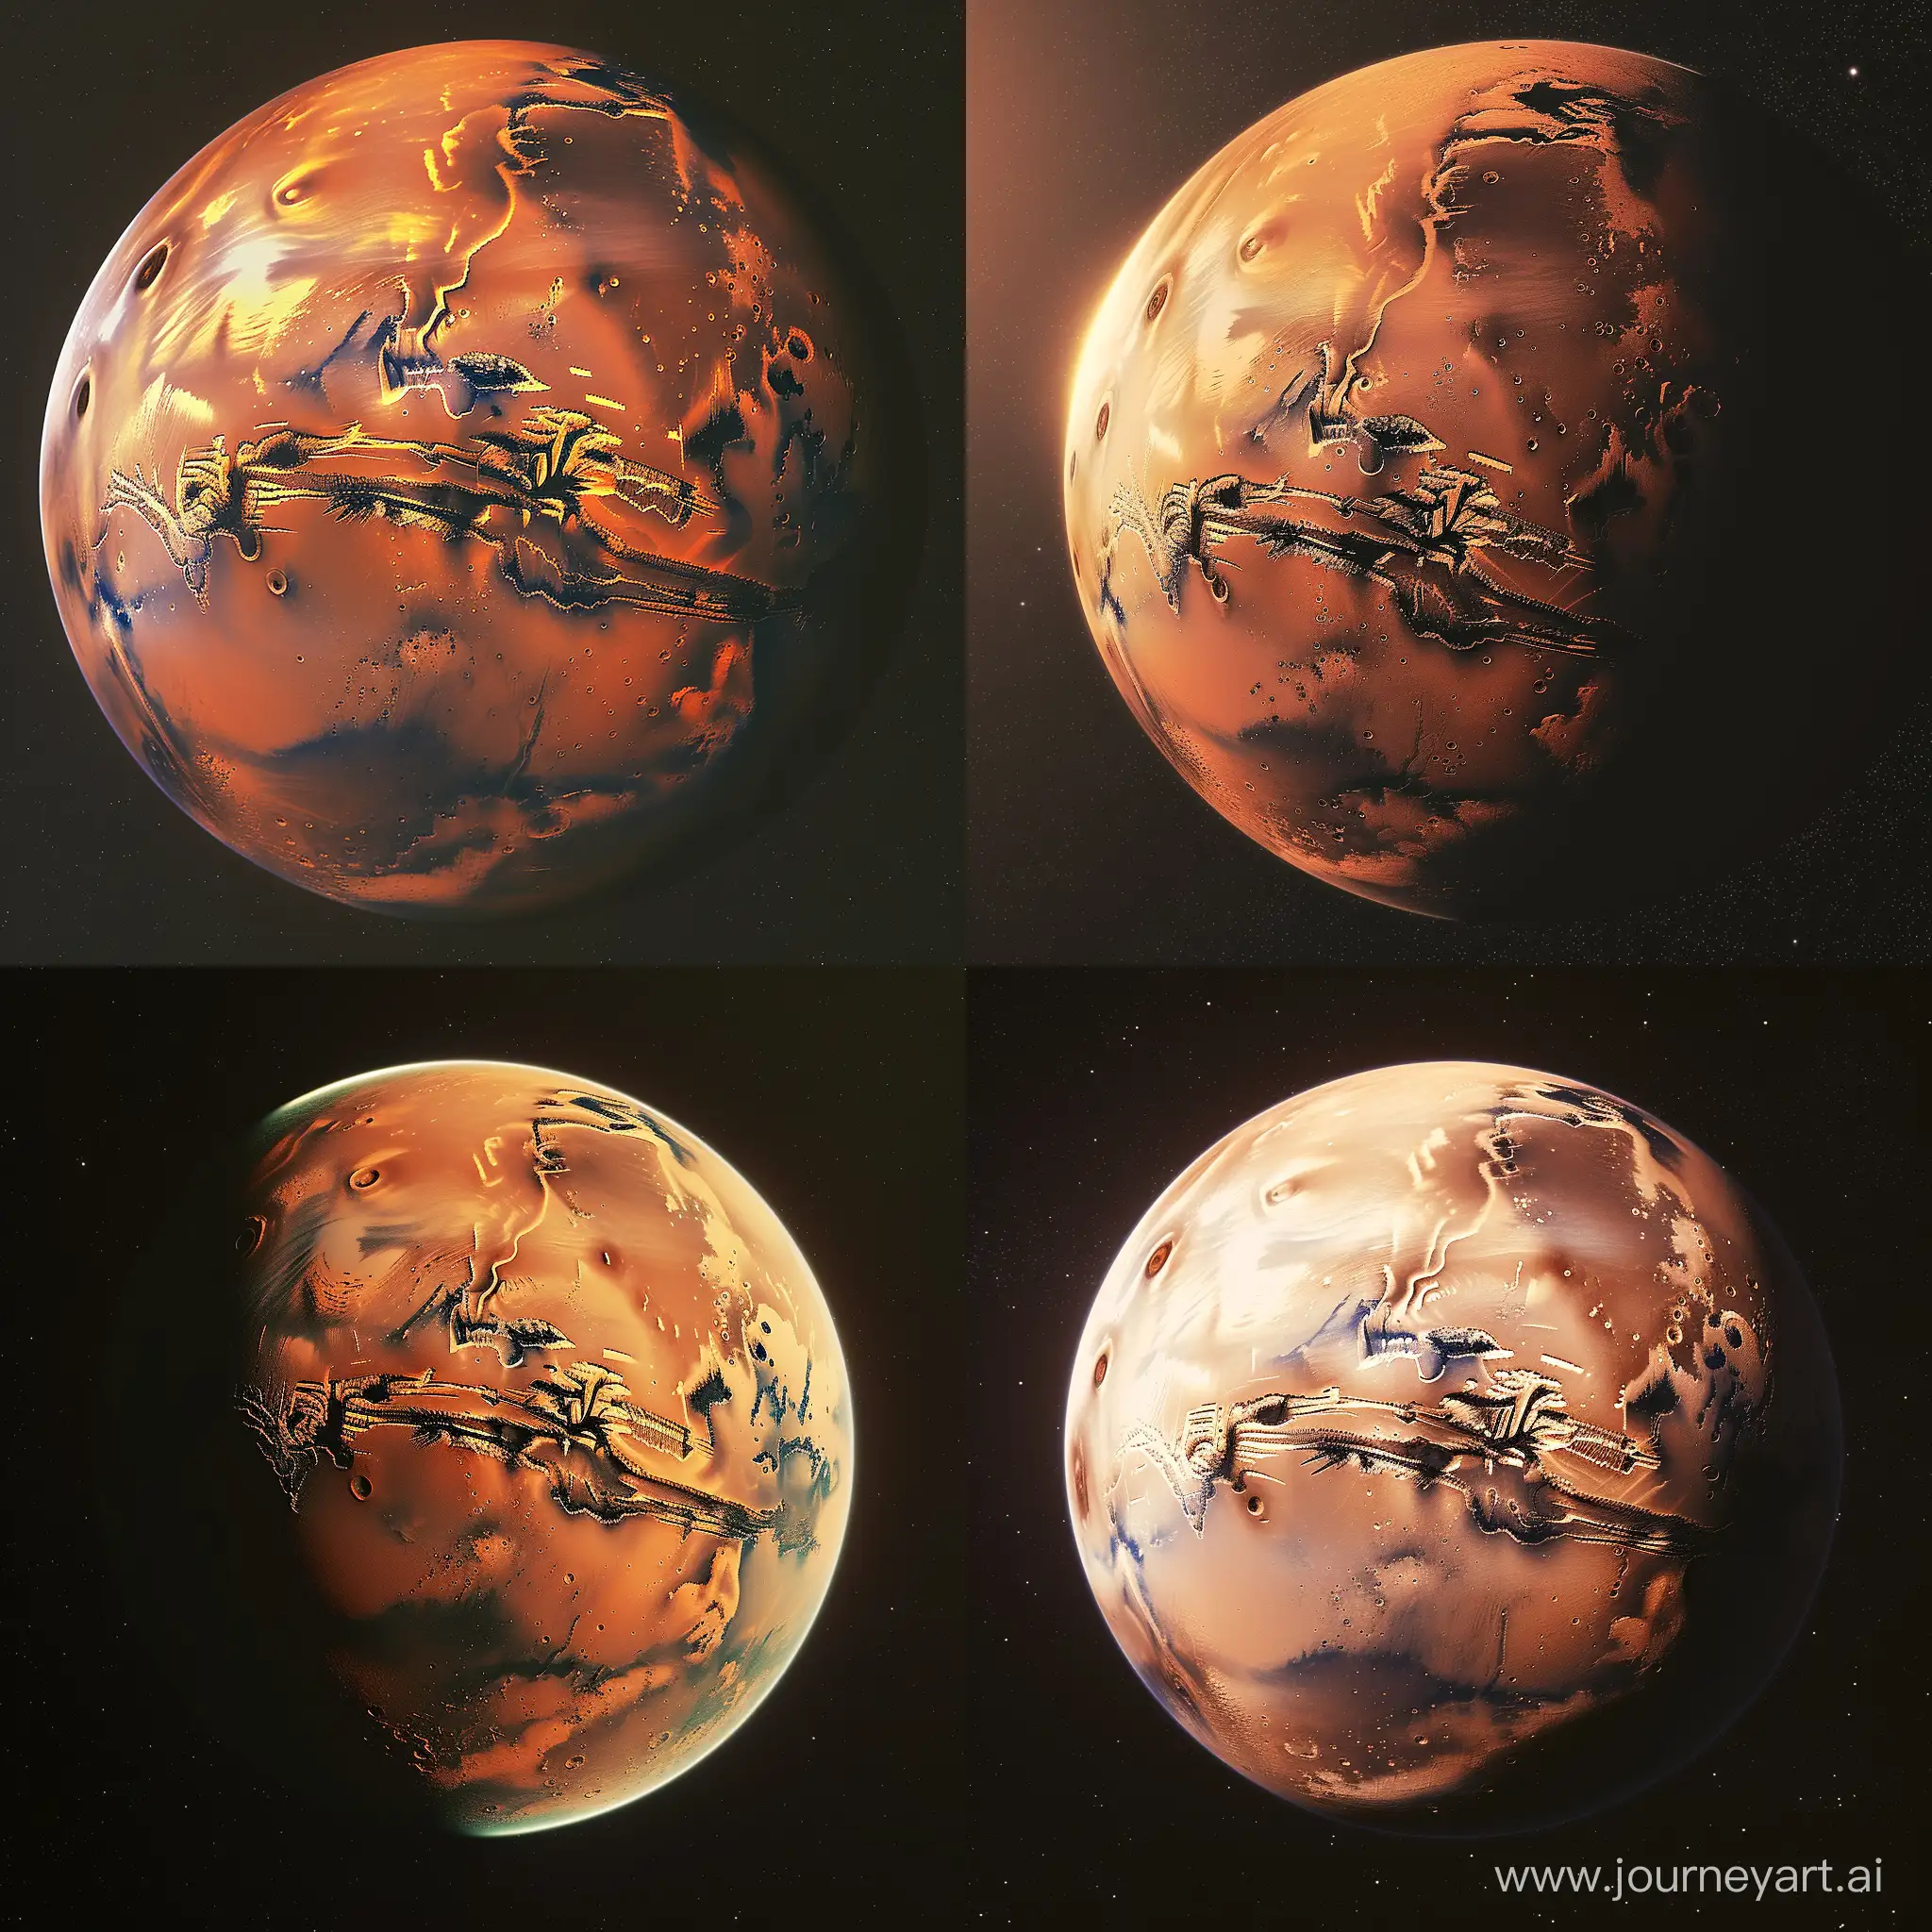 Futuristic-Martian-Landscape-Exploration